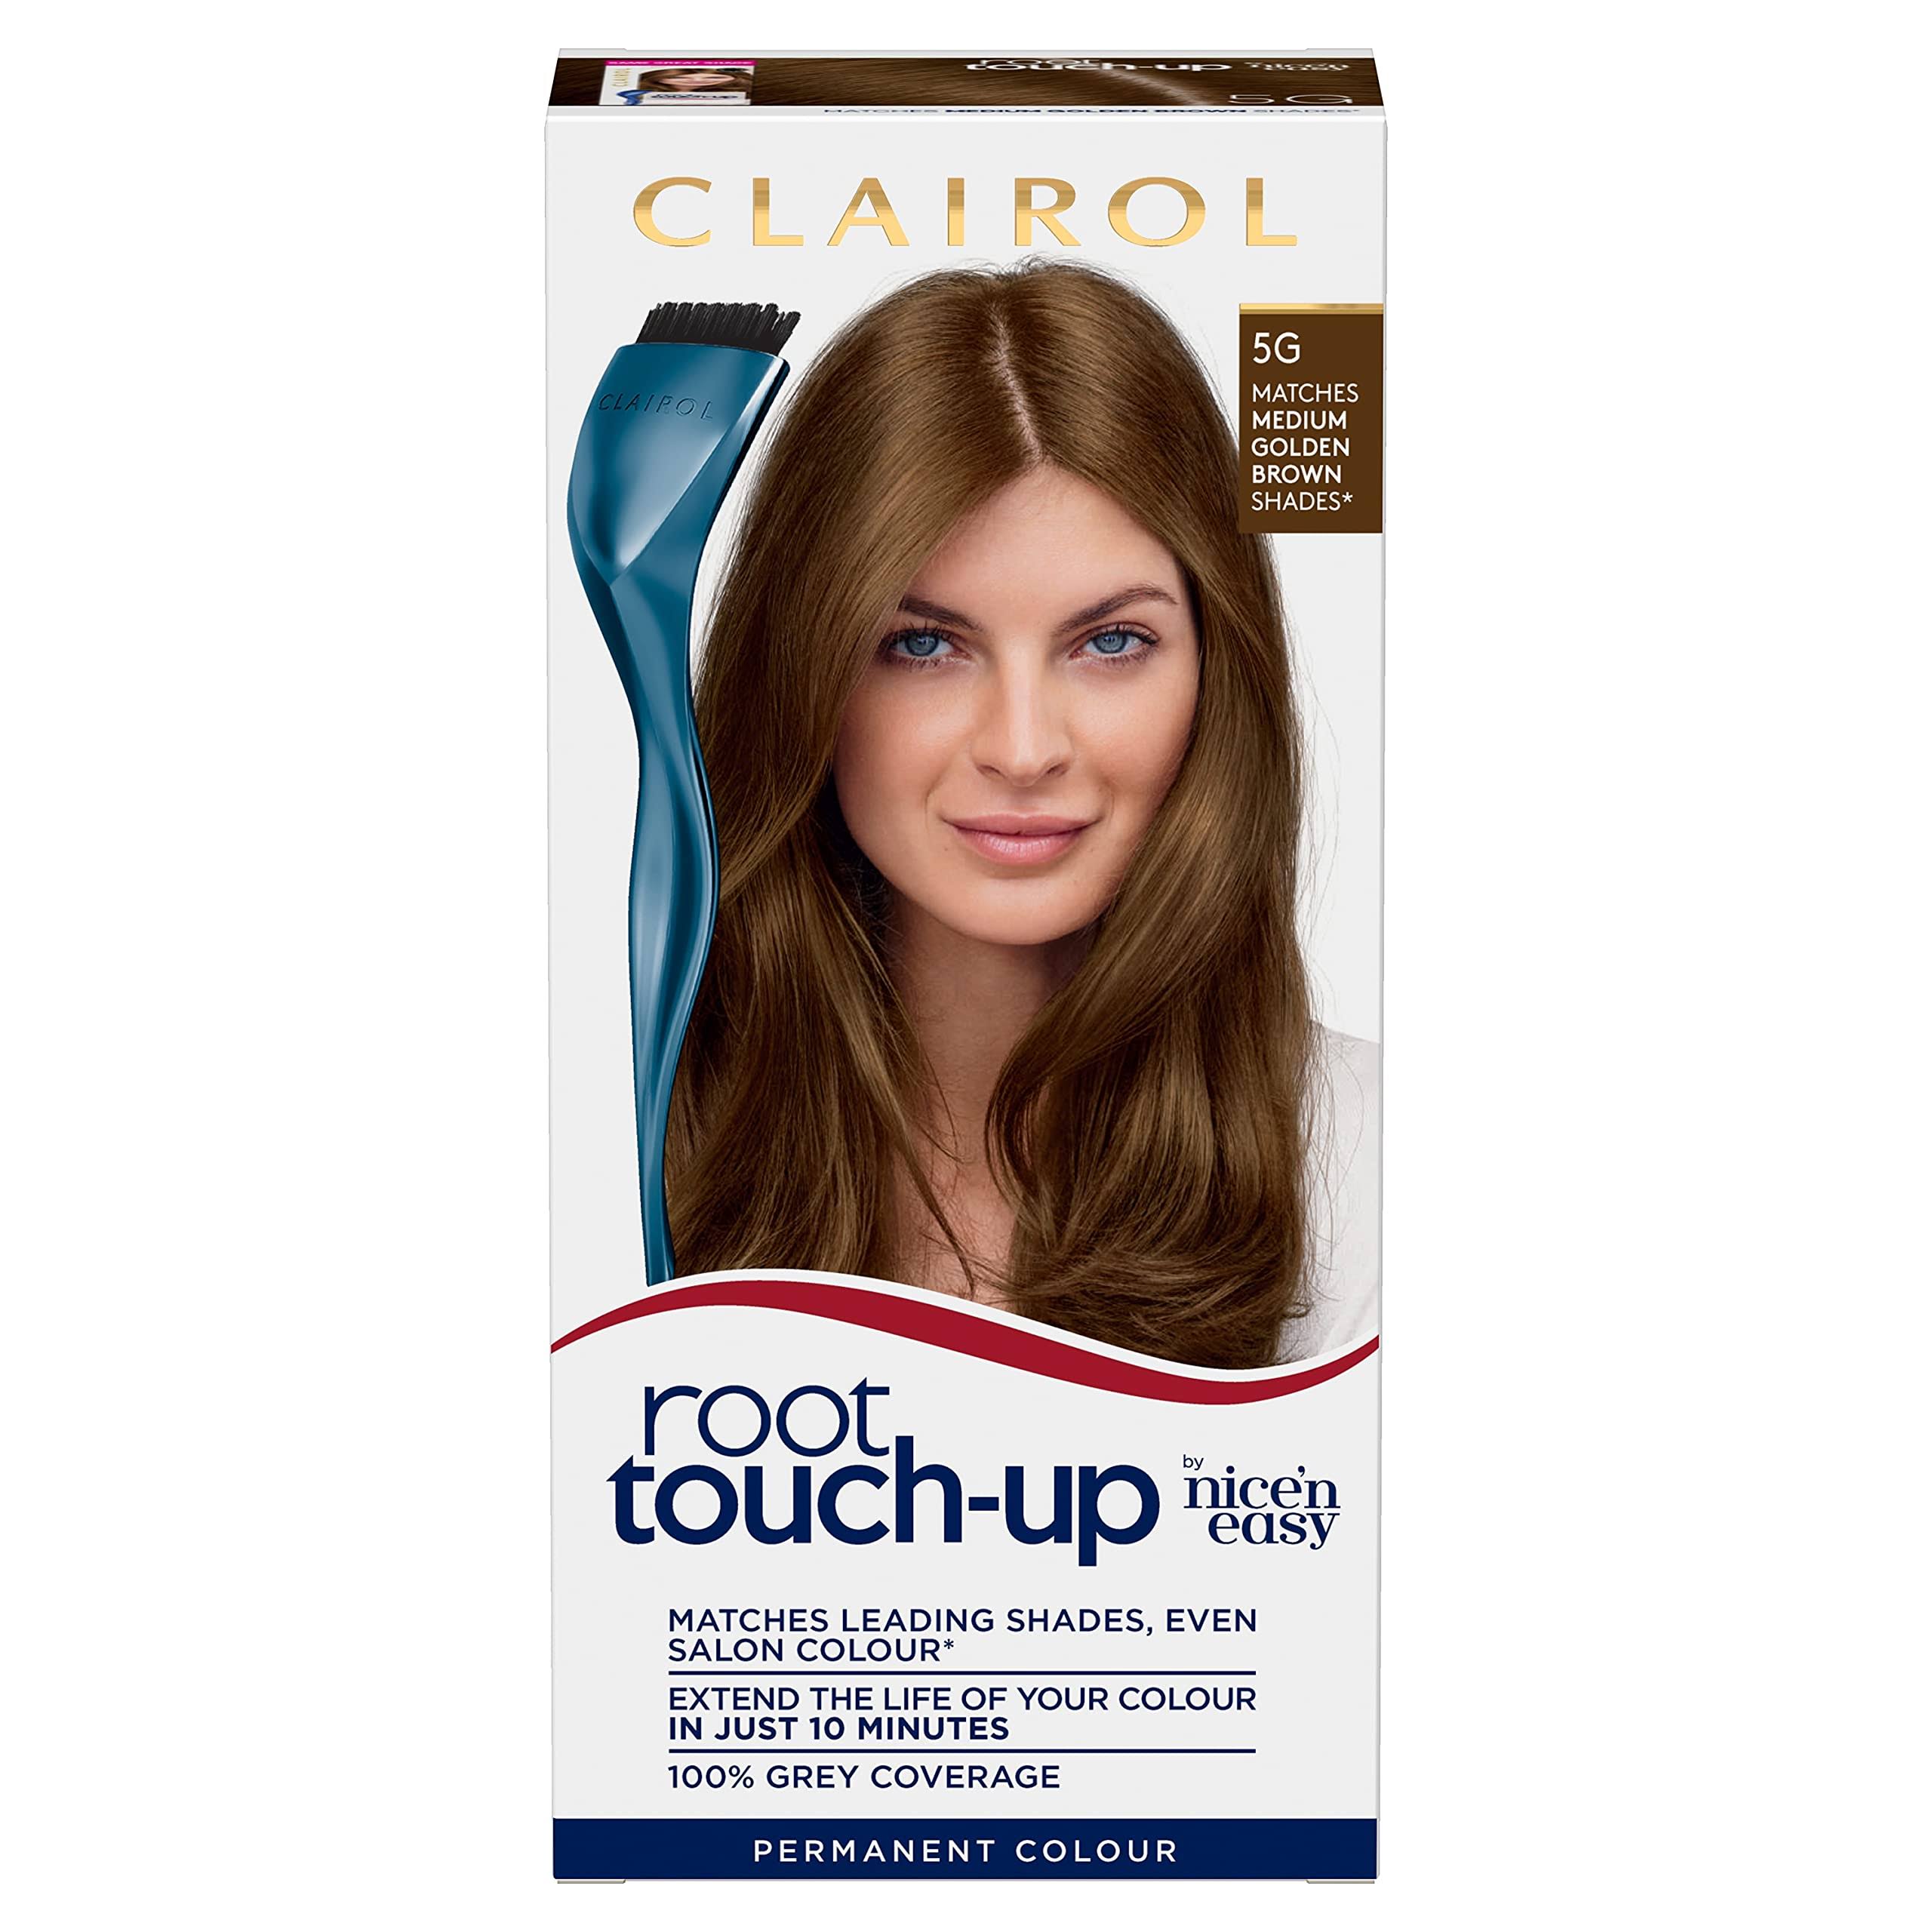 Clairol Root Touch Up Hair Dye - 5G Medium Golden Brown